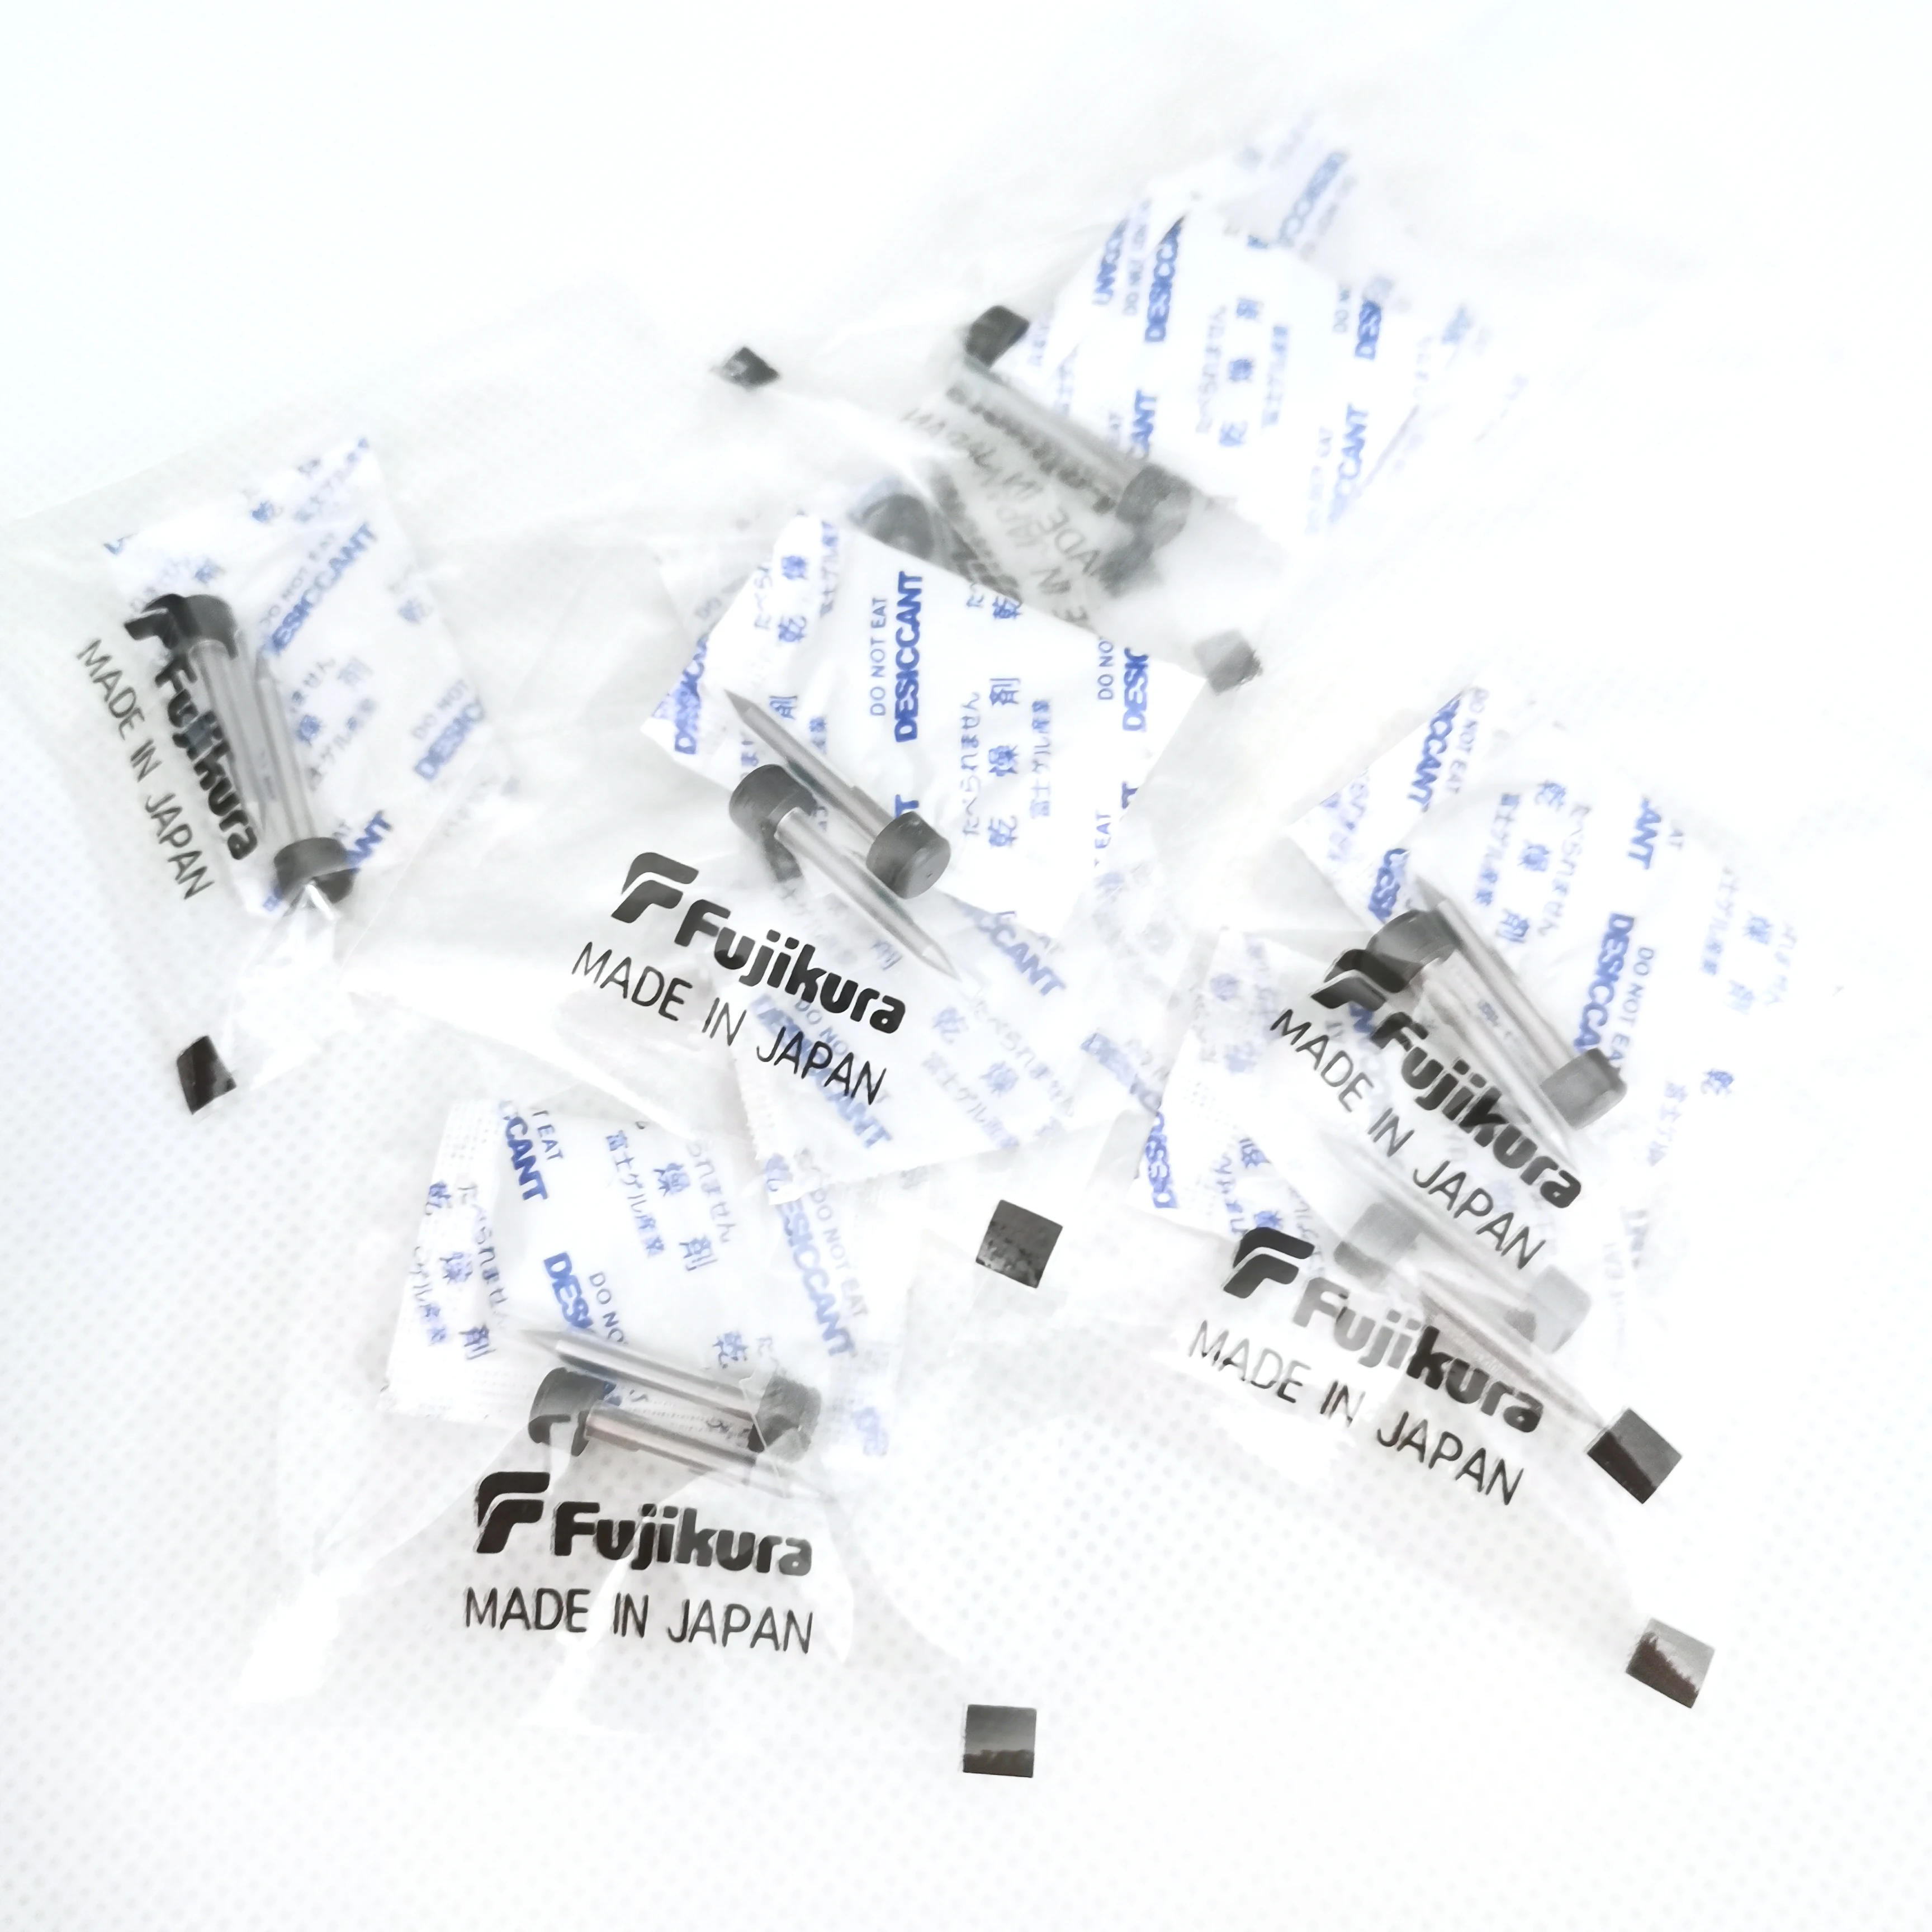 Fusion Splicer FSM-50S/60S/70S/60R/70R/80s Electrode ELCT2-20A for Fujikura